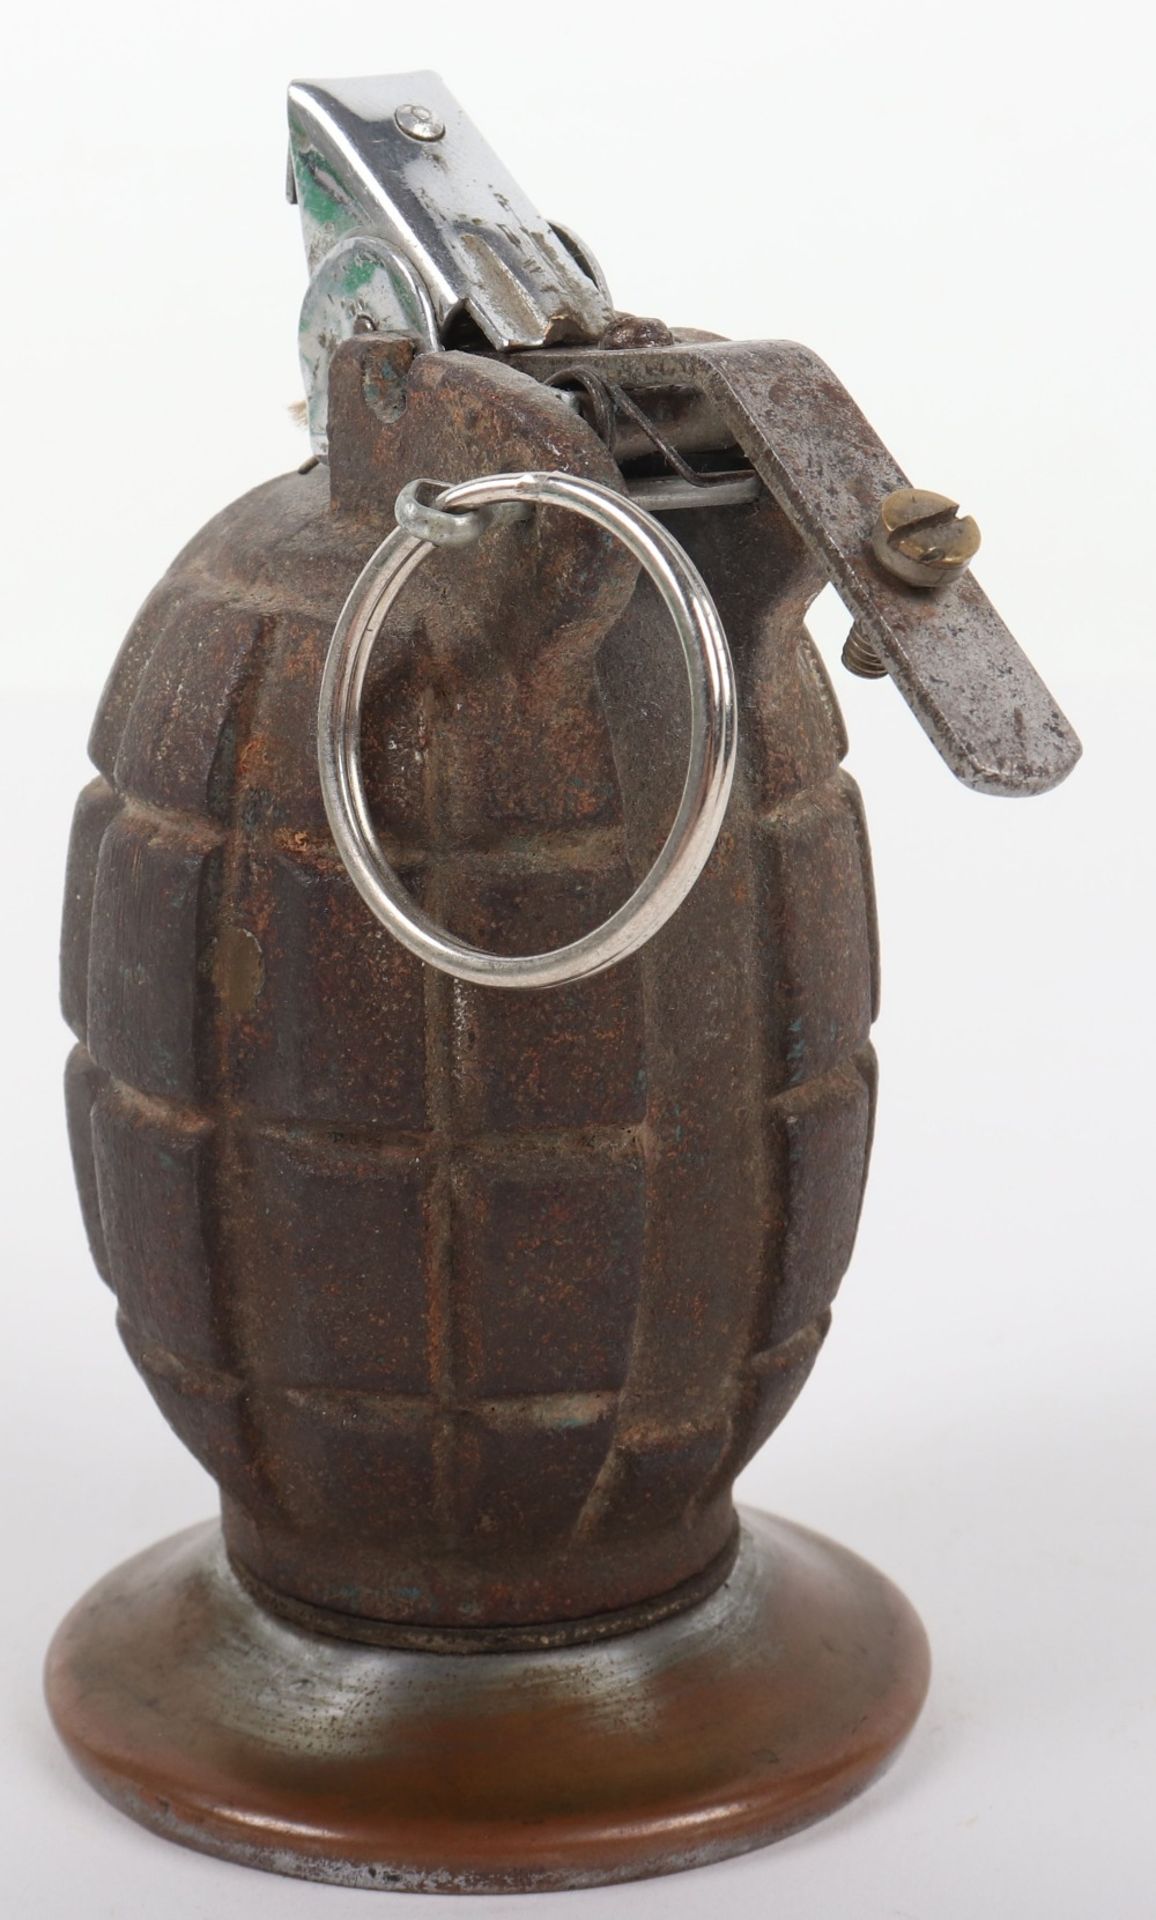 Inert British Mills Grenade Converted to Table Lighter - Image 4 of 6